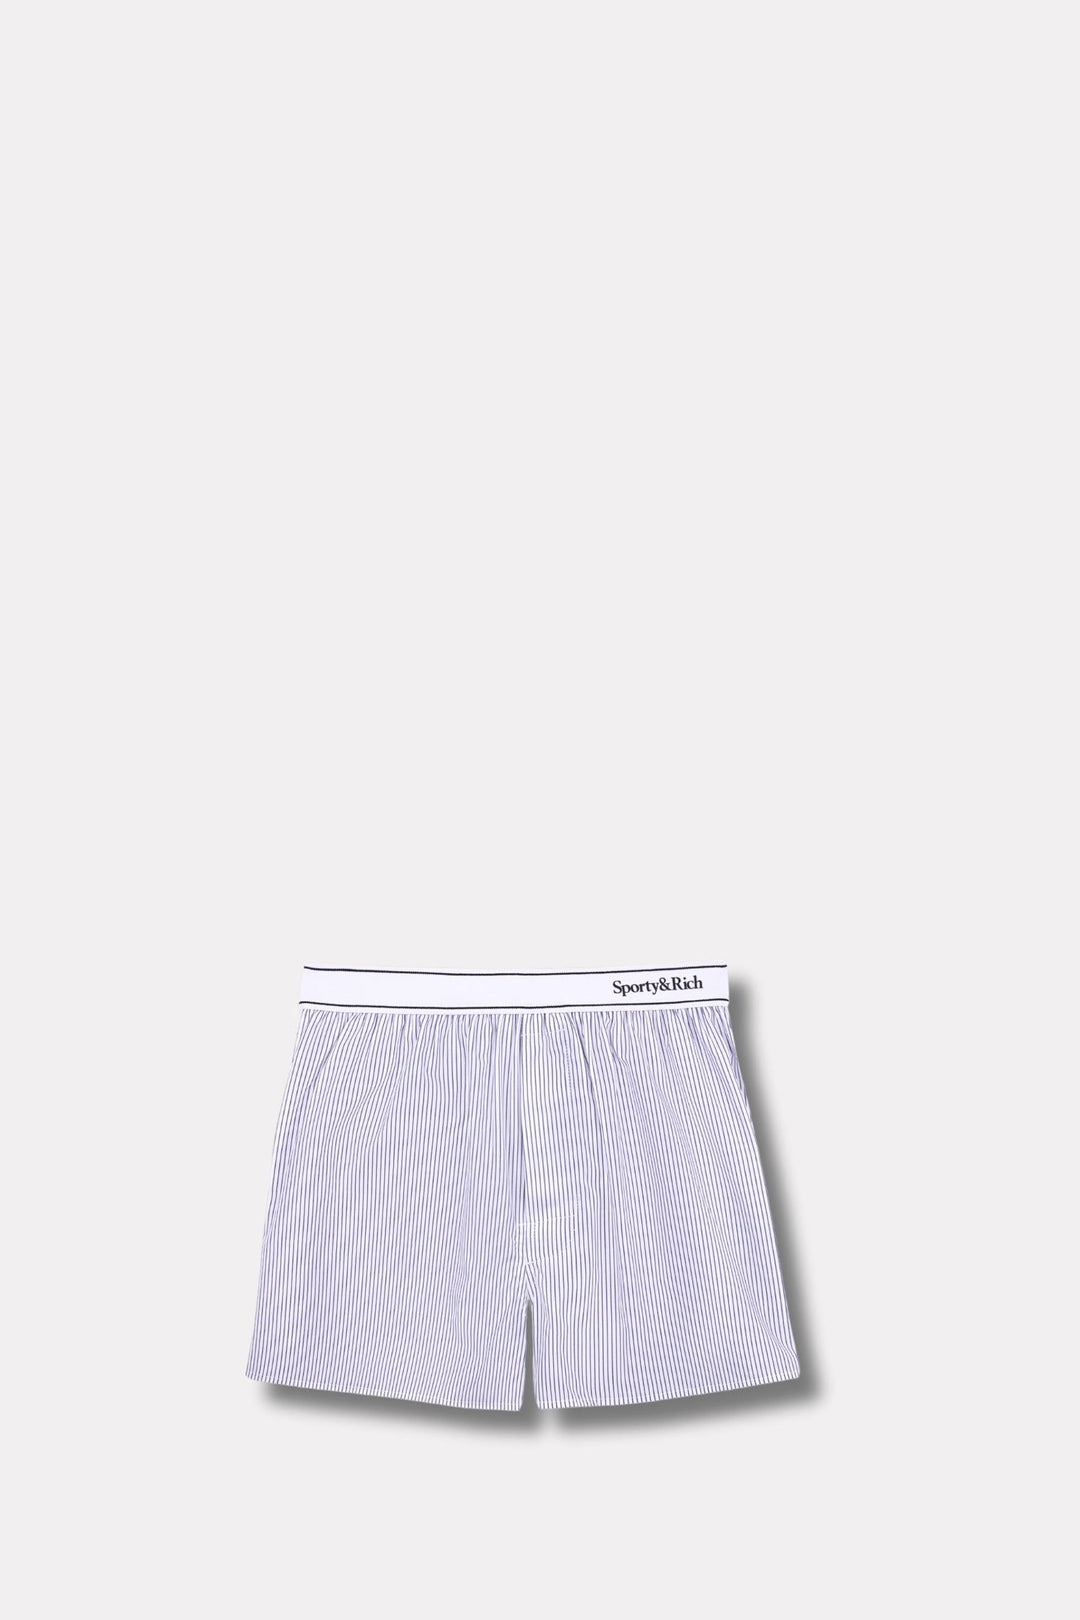 Serif Logo Boxer Shorts- White/Navy Thin Stripe